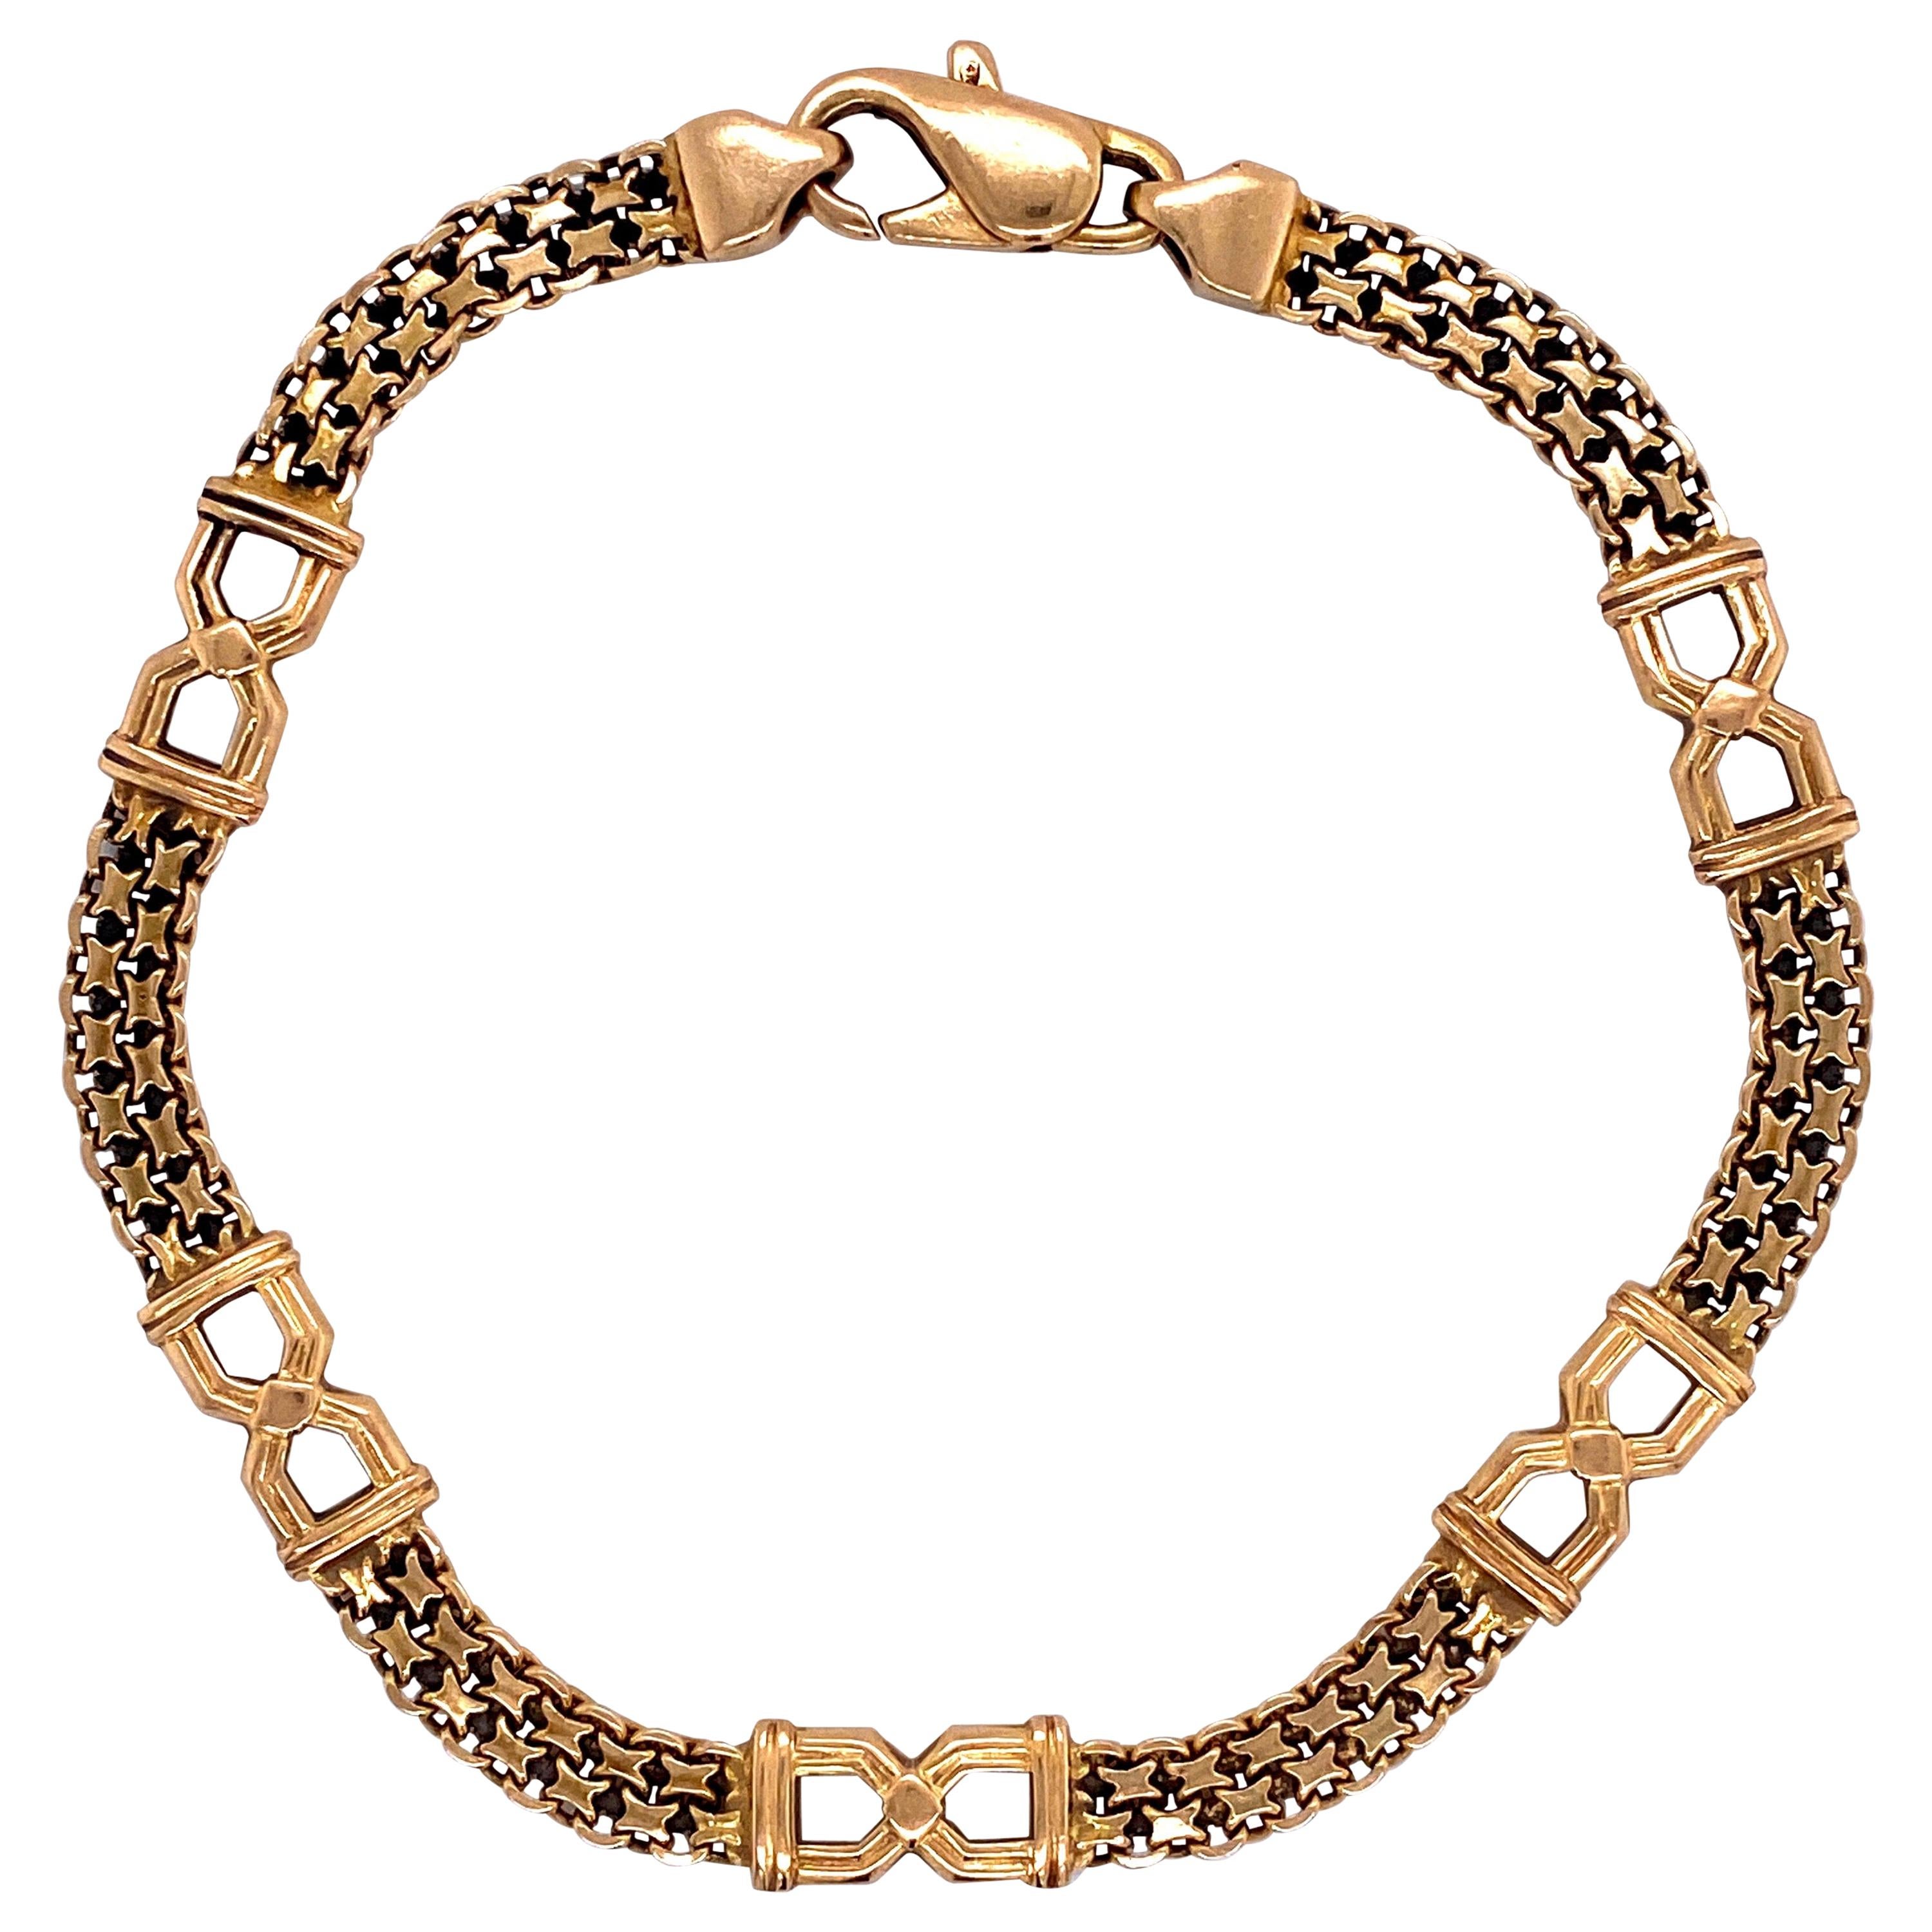 Vintage 14 Karat Yellow Gold Chain Link Bracelet with Black Enamel Italy